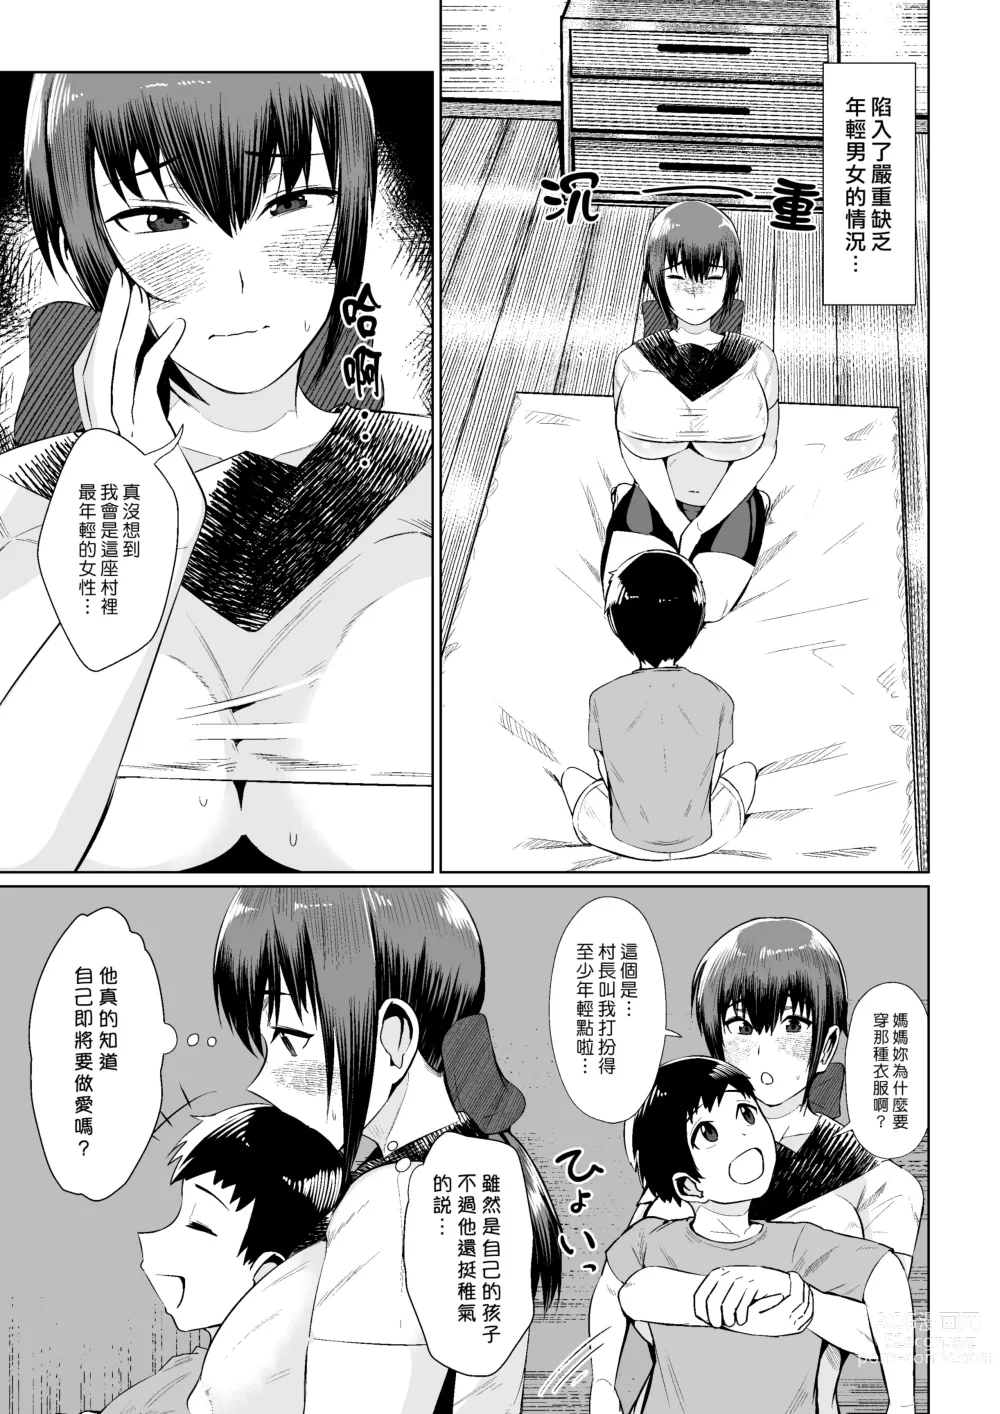 Page 5 of doujinshi 村中戒律不得違背